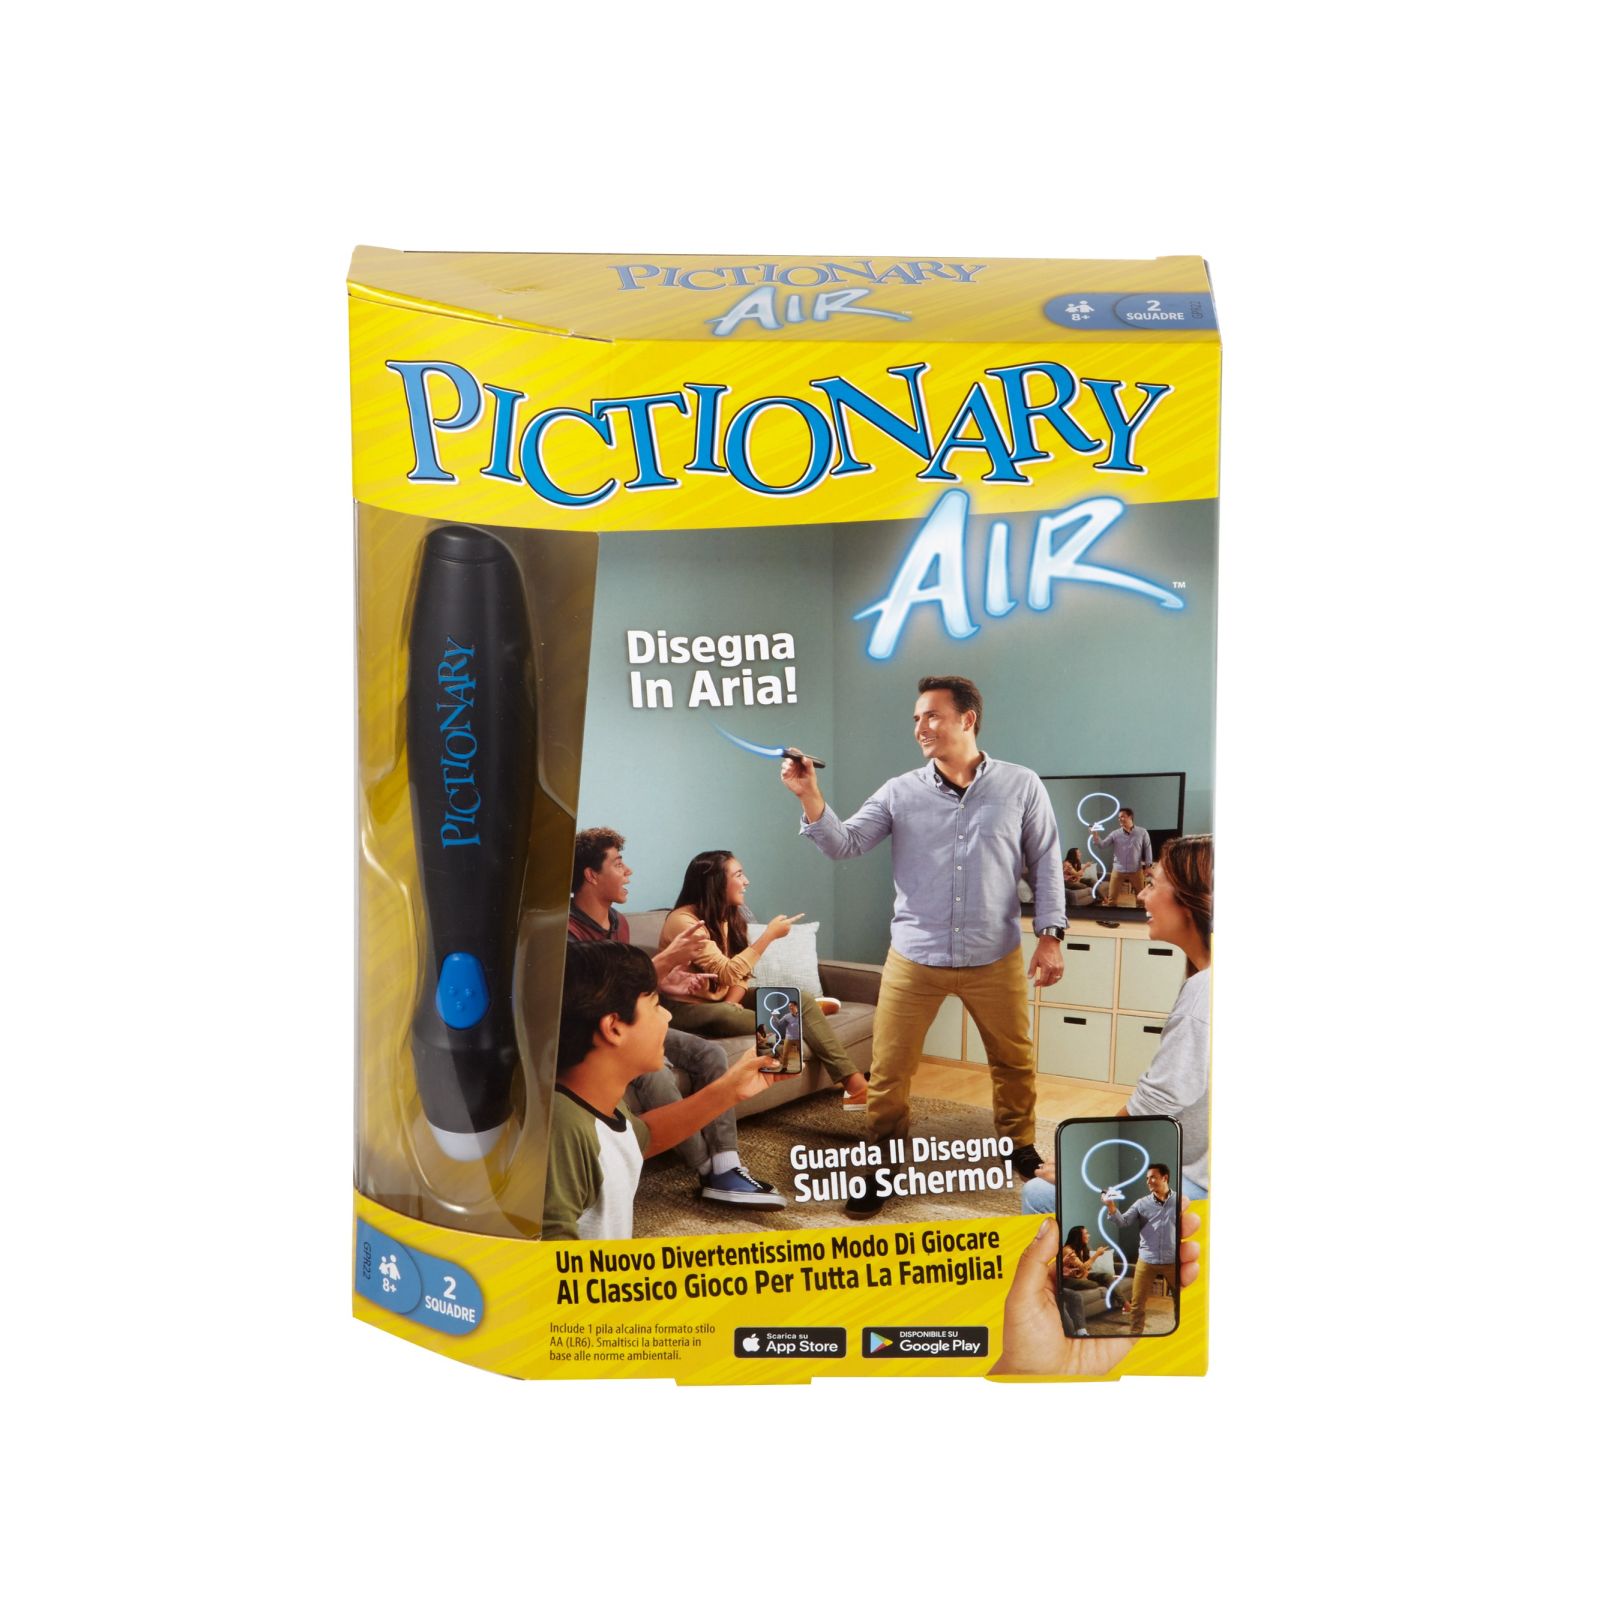 Pictionary air, gioco per disegnare in aria - MATTEL GAMES